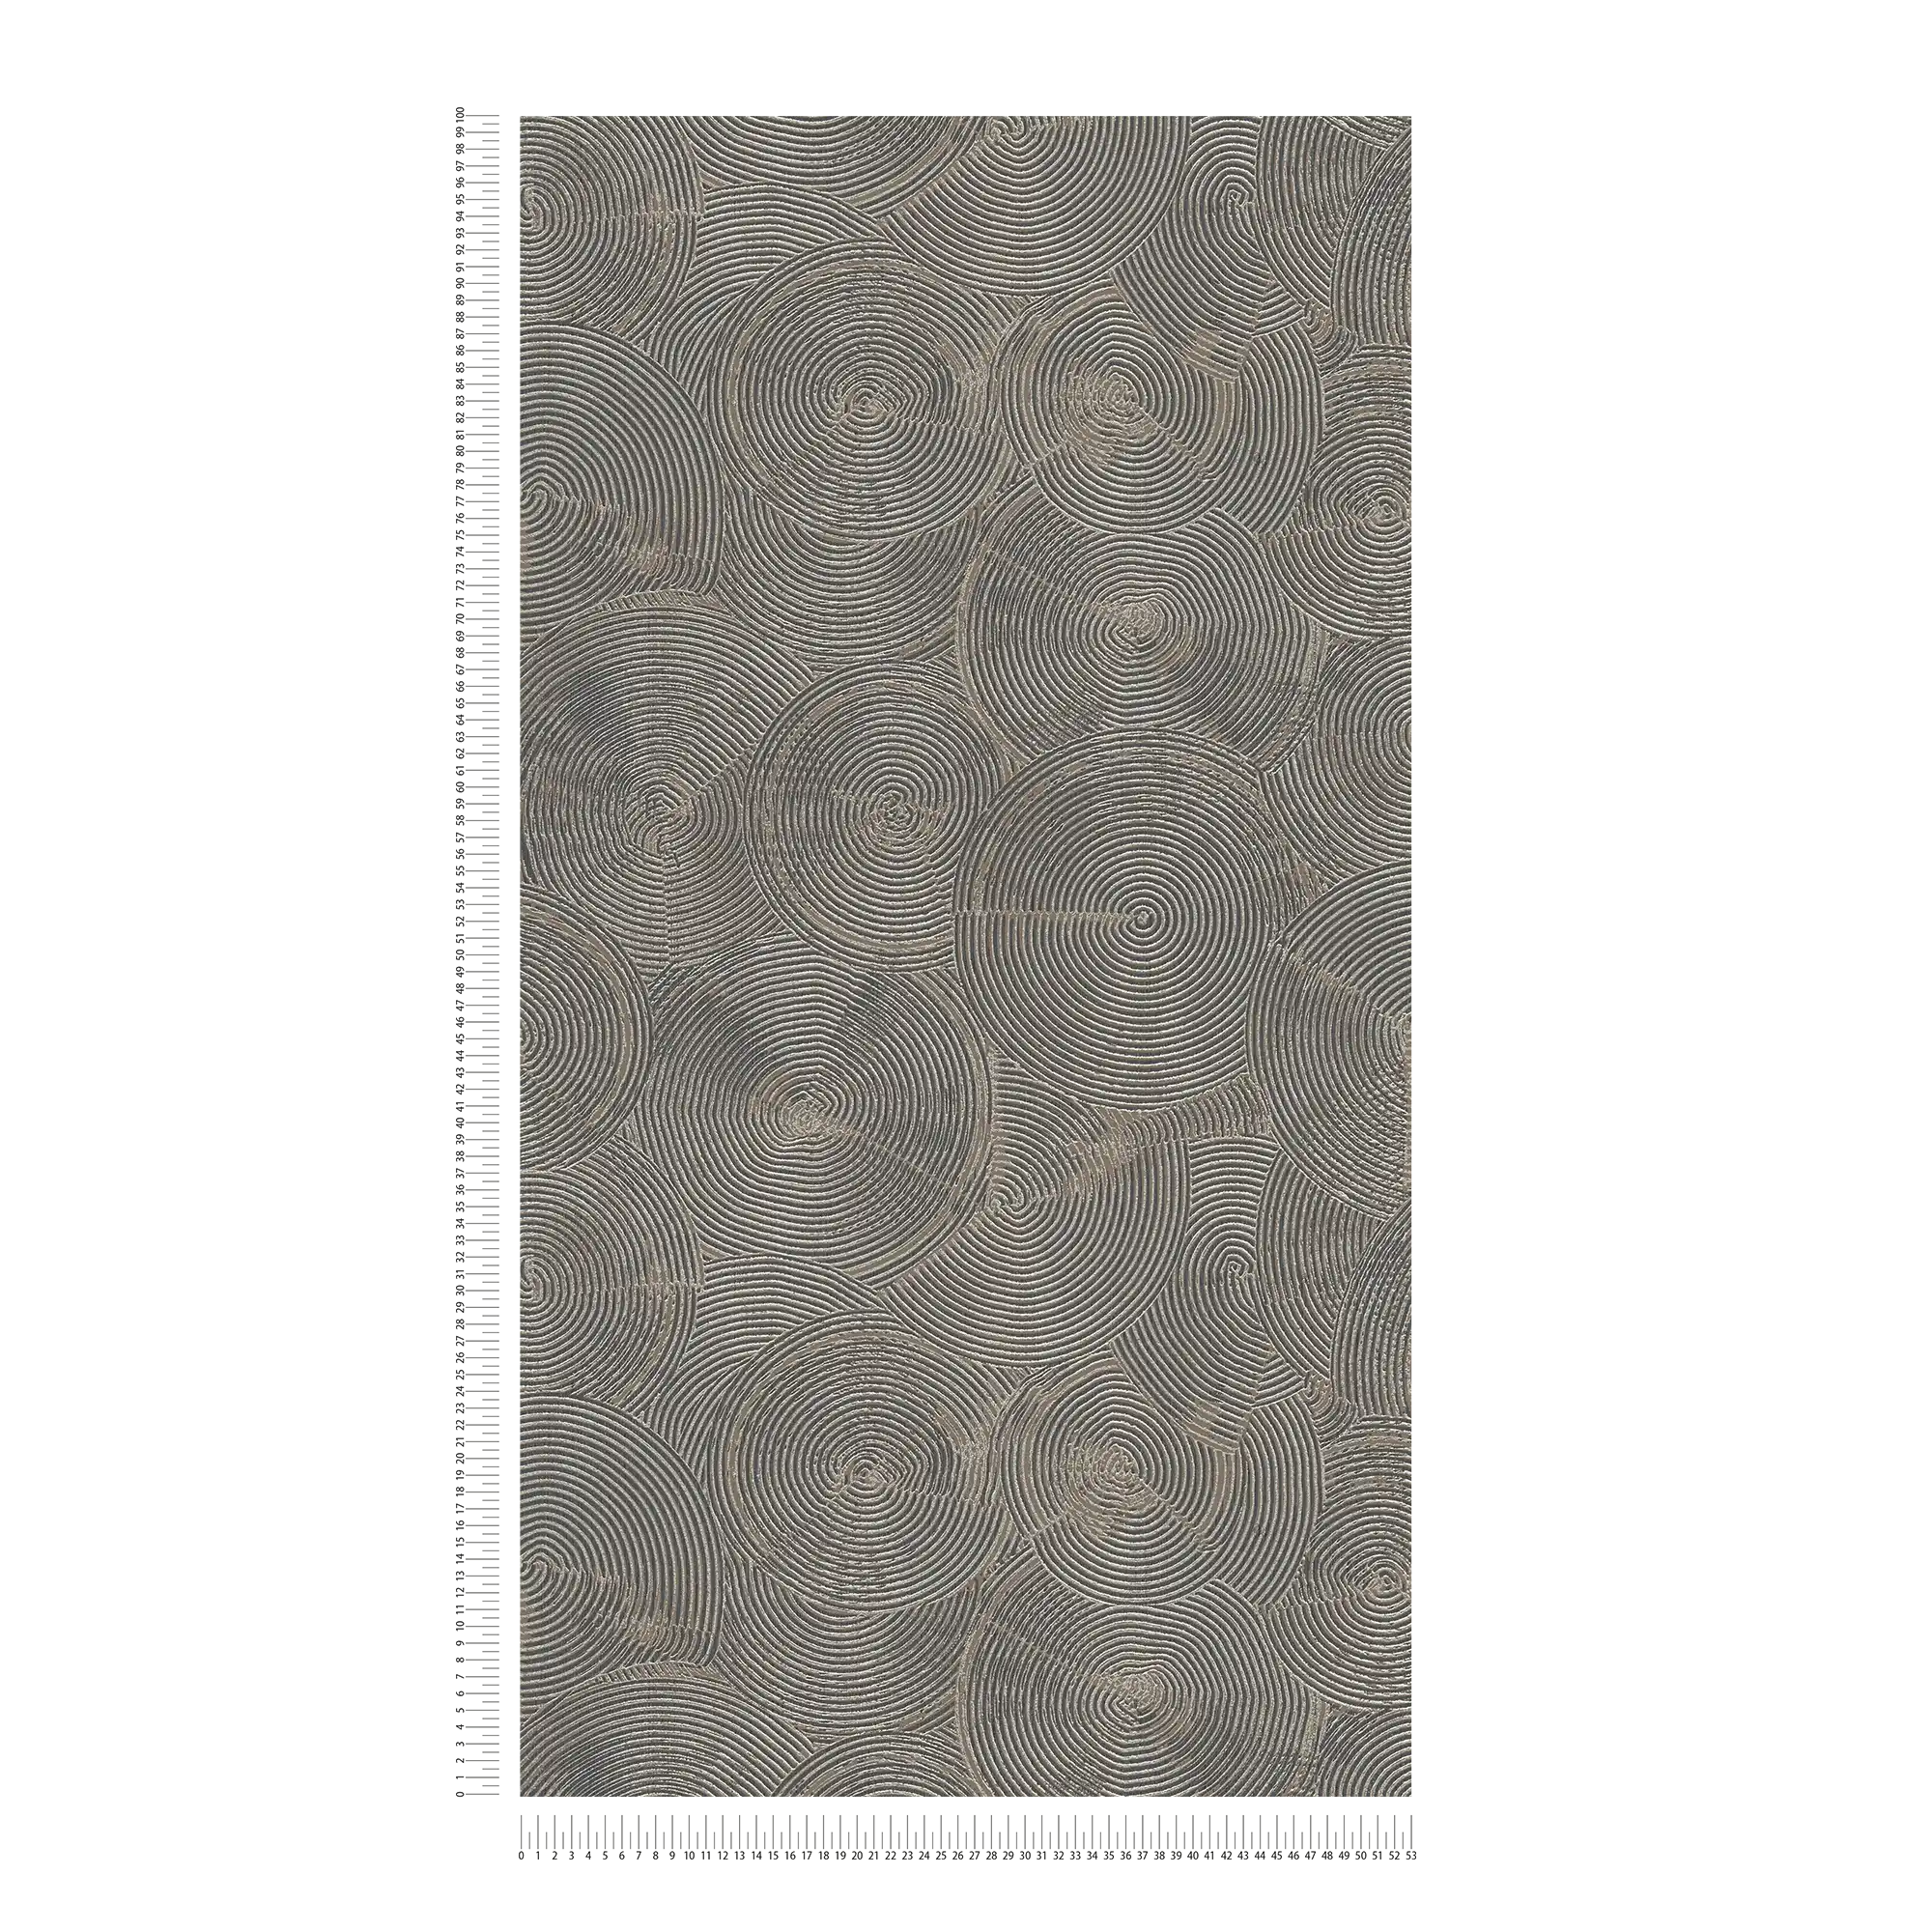             Wallpaper modern plaster look with metallic effect - brown, metallic, black
        